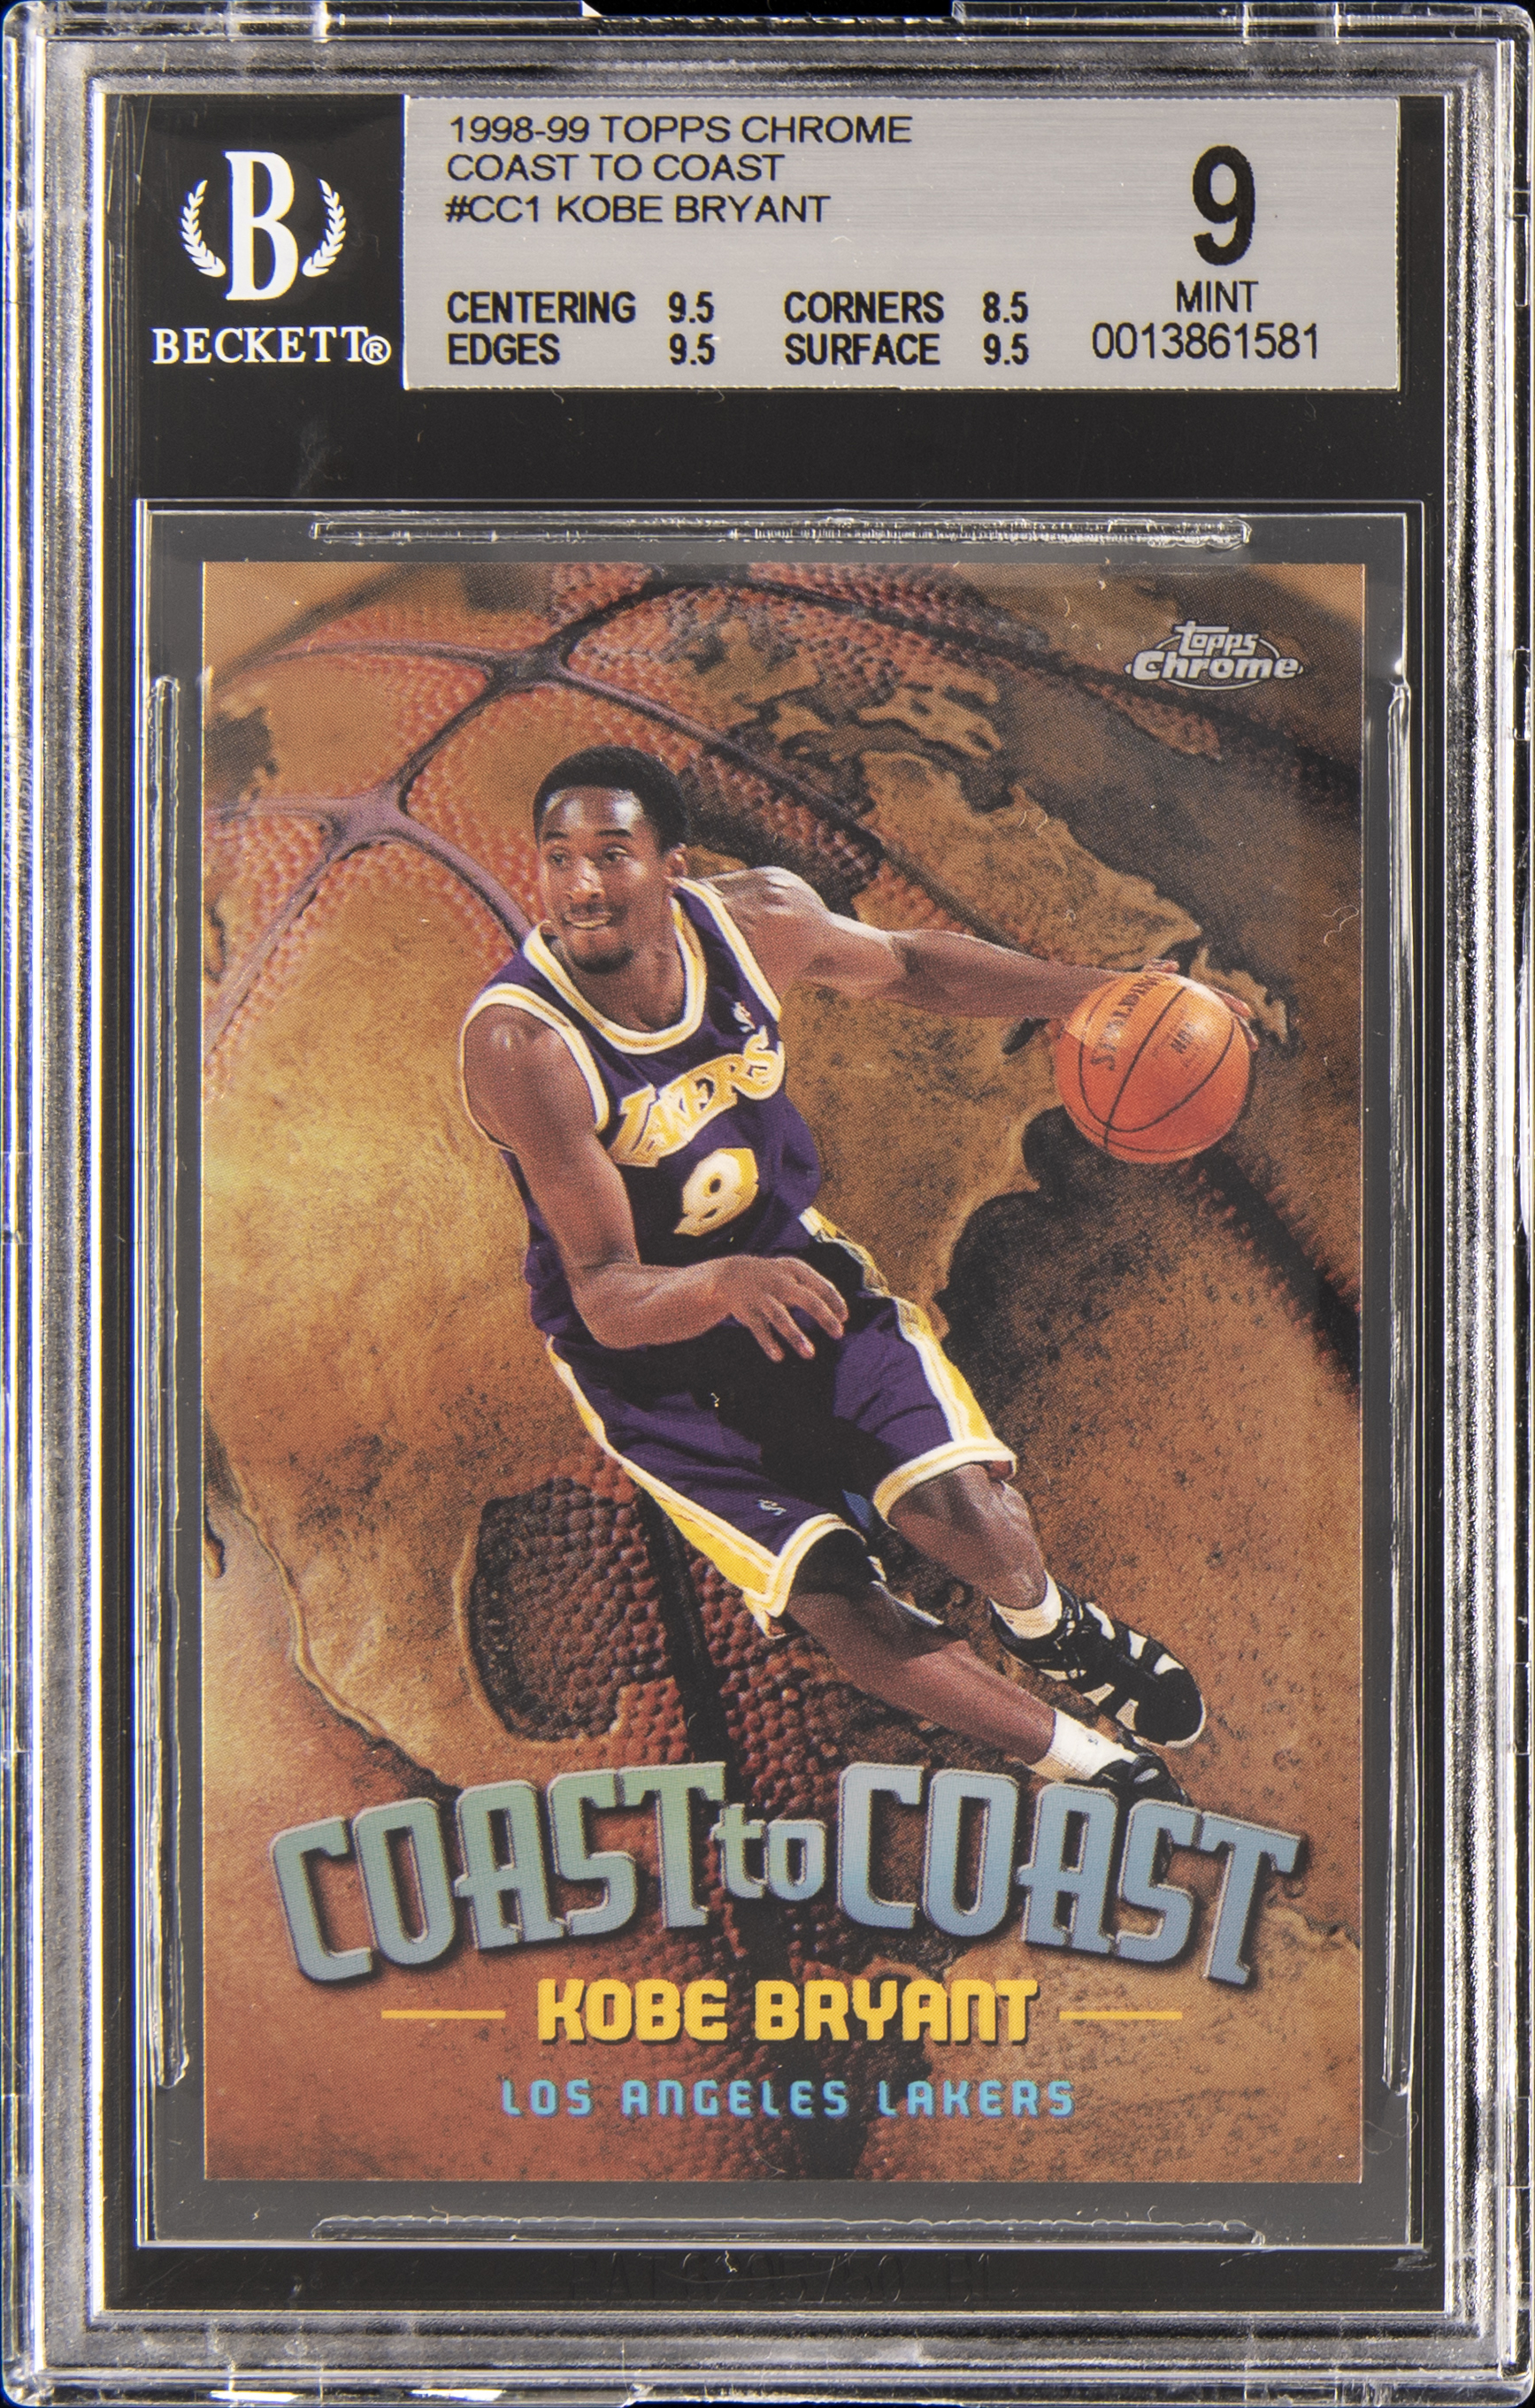 1998-99 Topps Chrome Coast To Coast #CC1 Kobe Bryant – BGS MINT 9